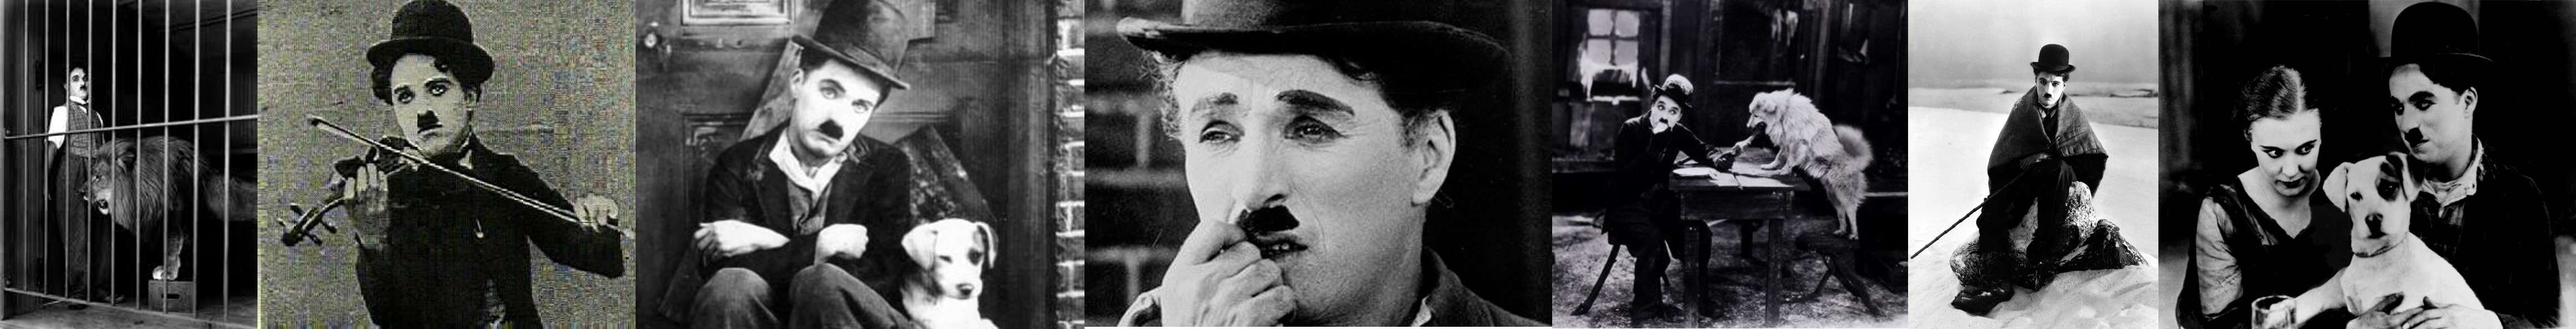 Charlie Chaplin Chapli13